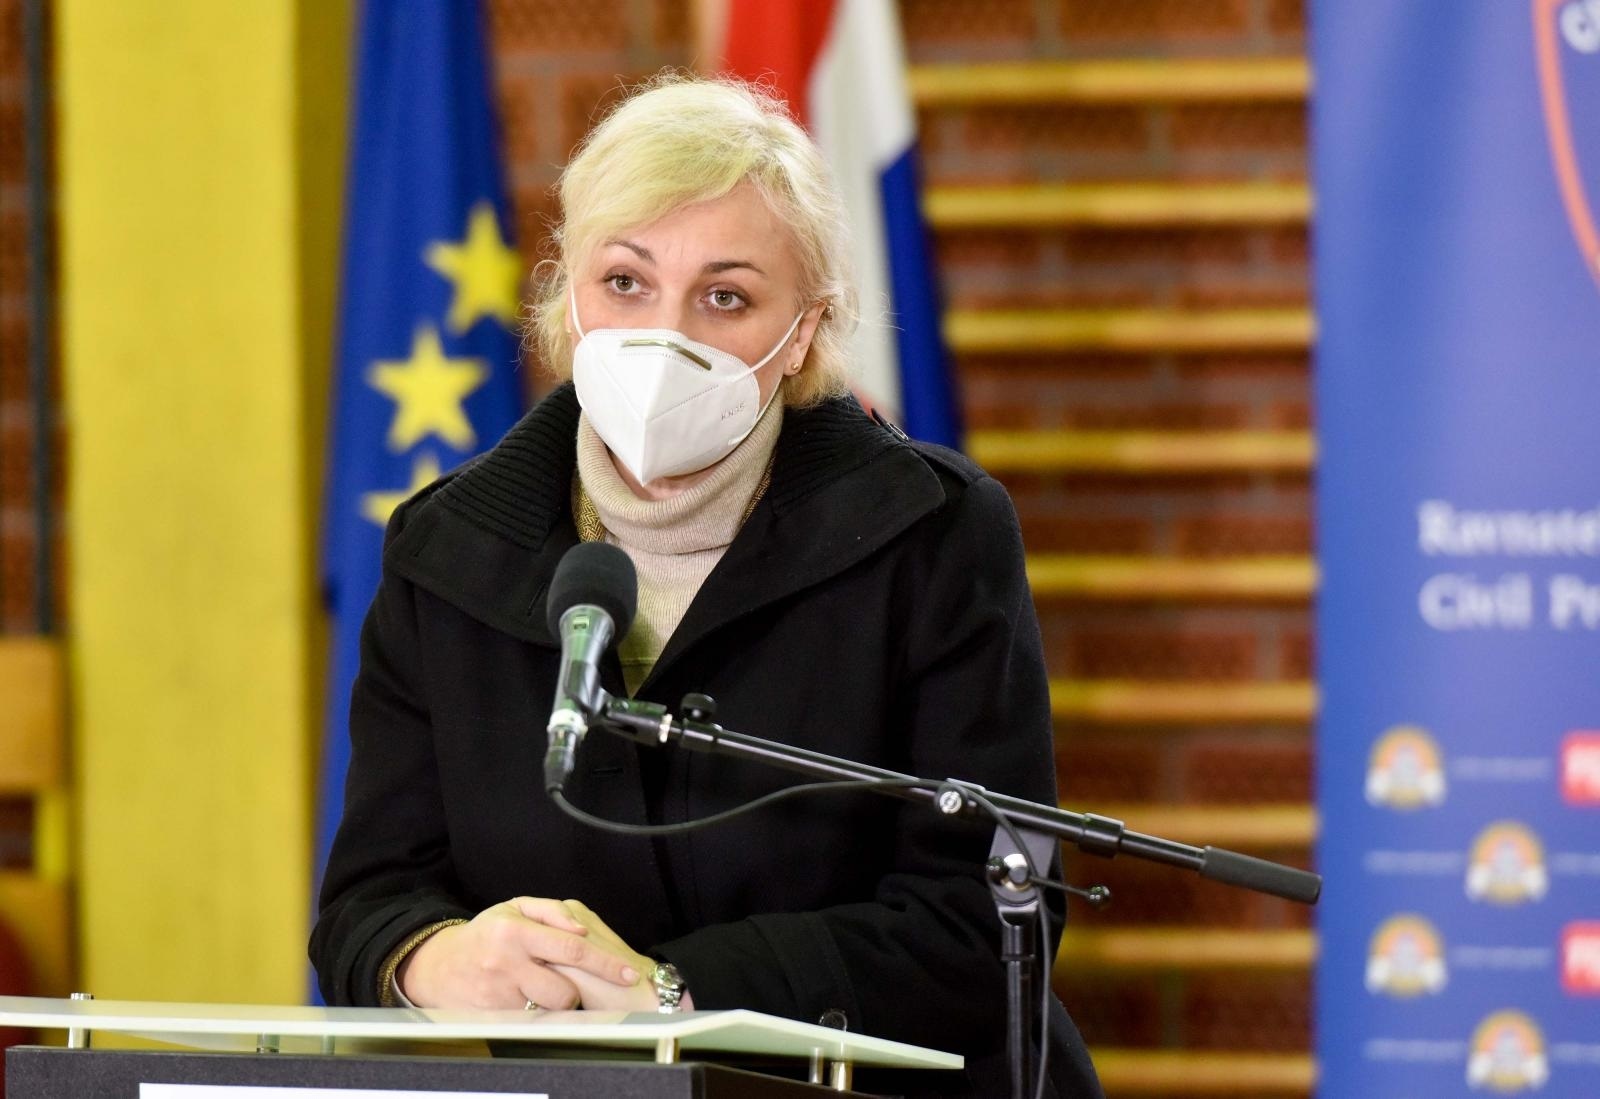 16.11.2020., Zagreb - Nacionalni stozer civilne zastite odrzao je redovnu konferenciju za medije.
Photo: Davorin Visnjic/PIXSELL